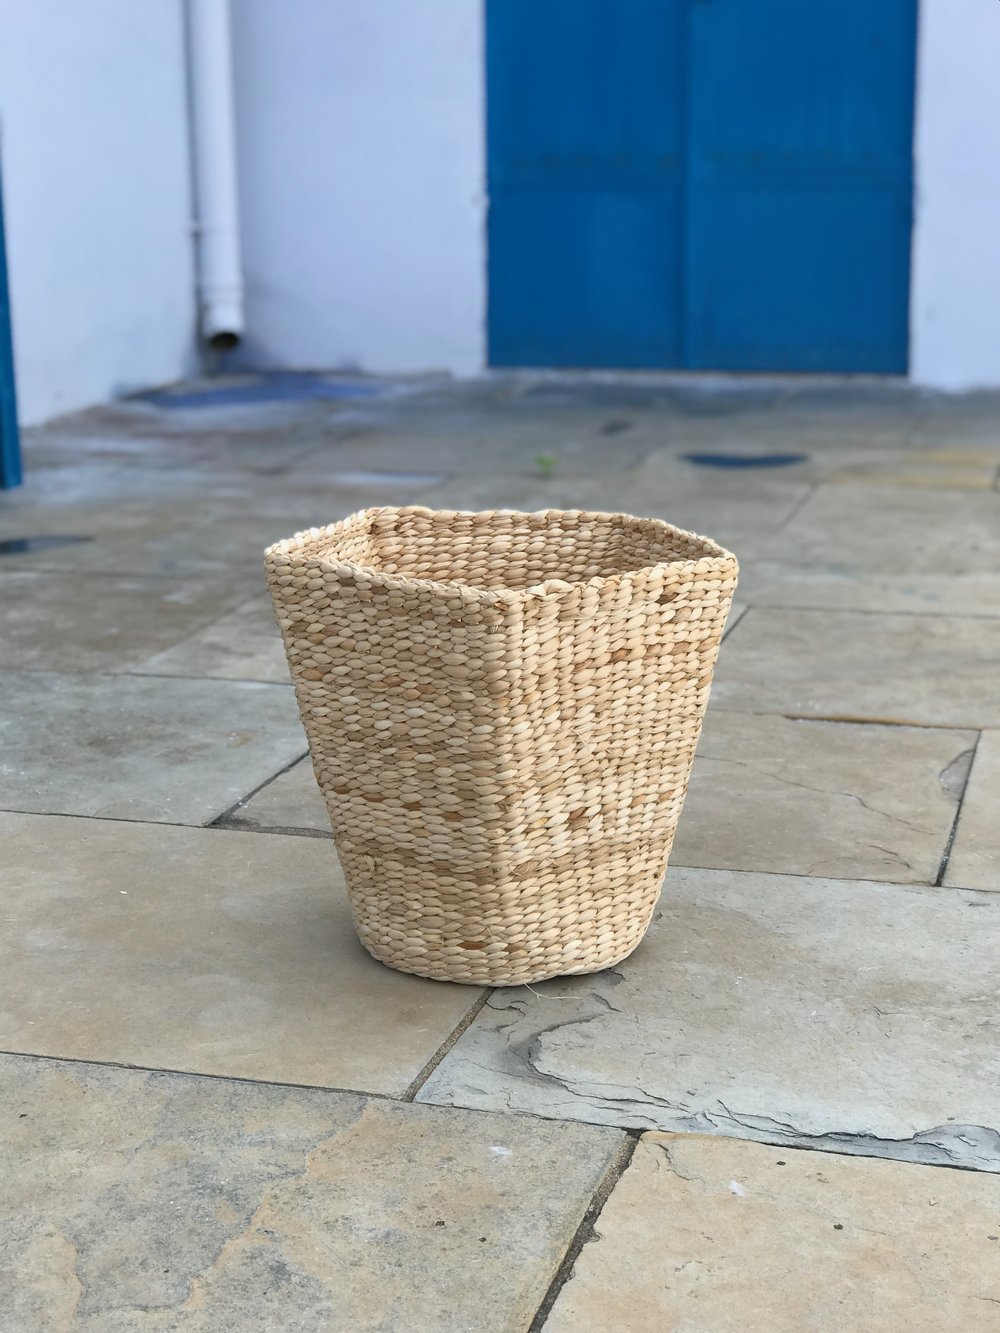 Prototype of the morph basket.